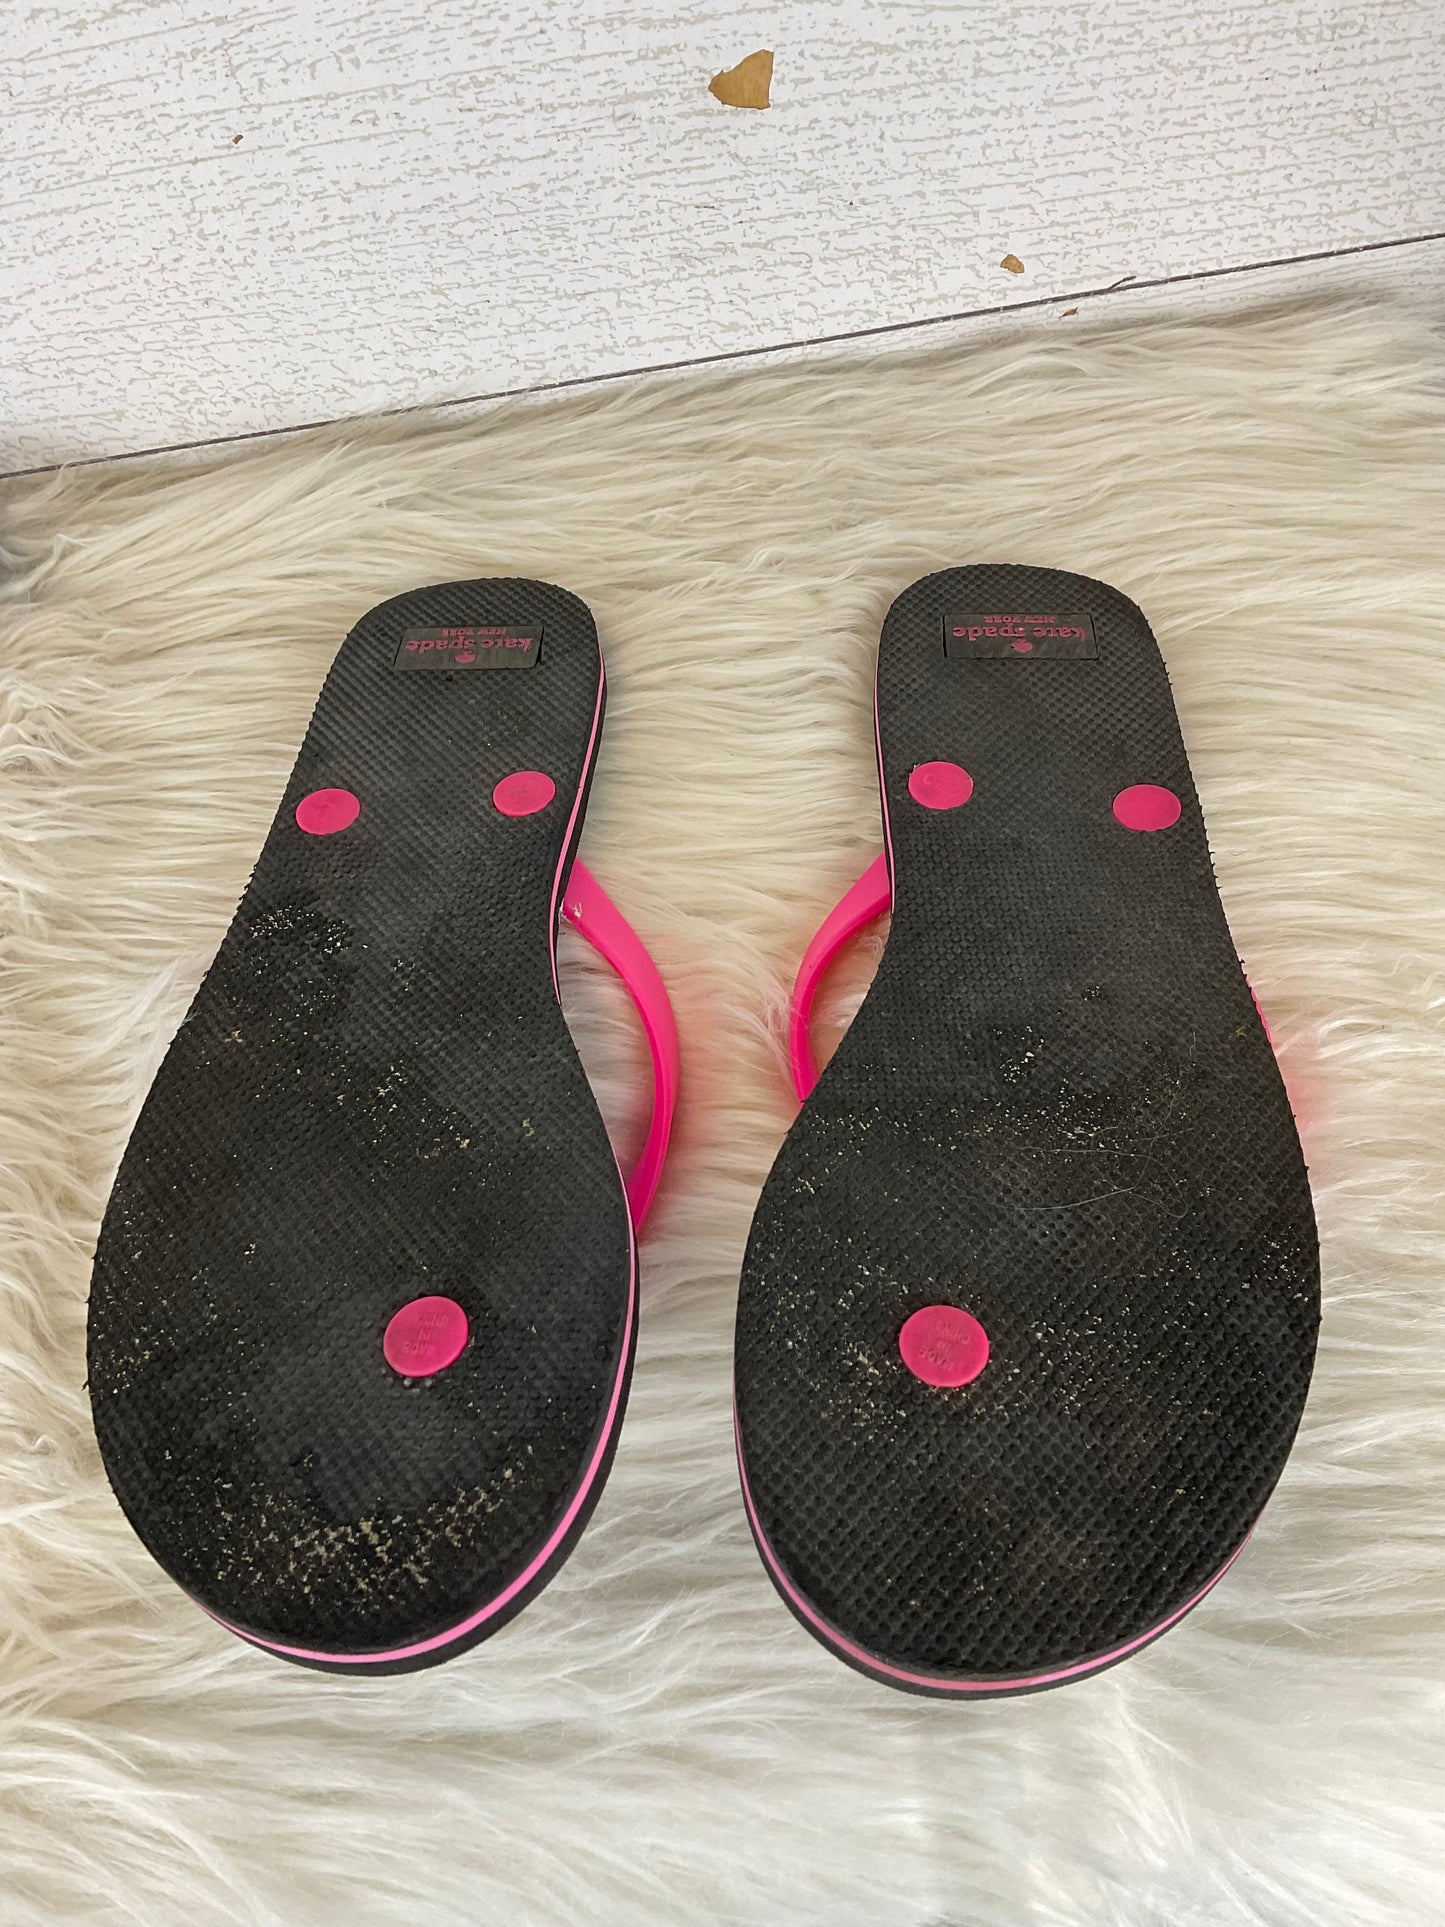 Sandals Flip Flops By Kate Spade  Size: 10